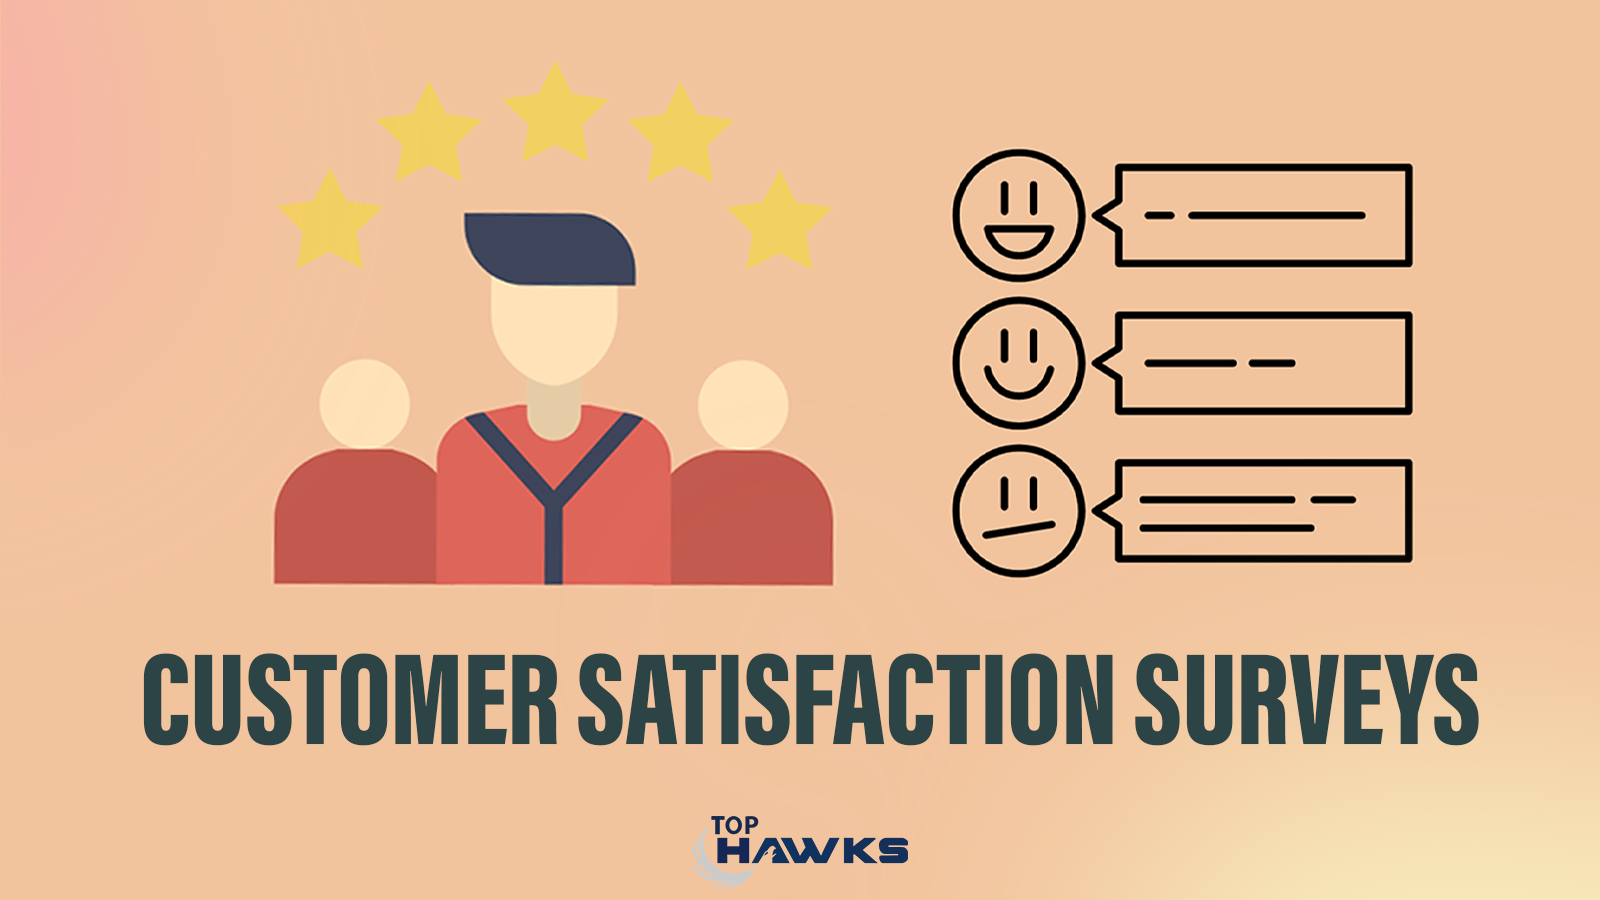 Image depicting Customer Satisfaction Surveys